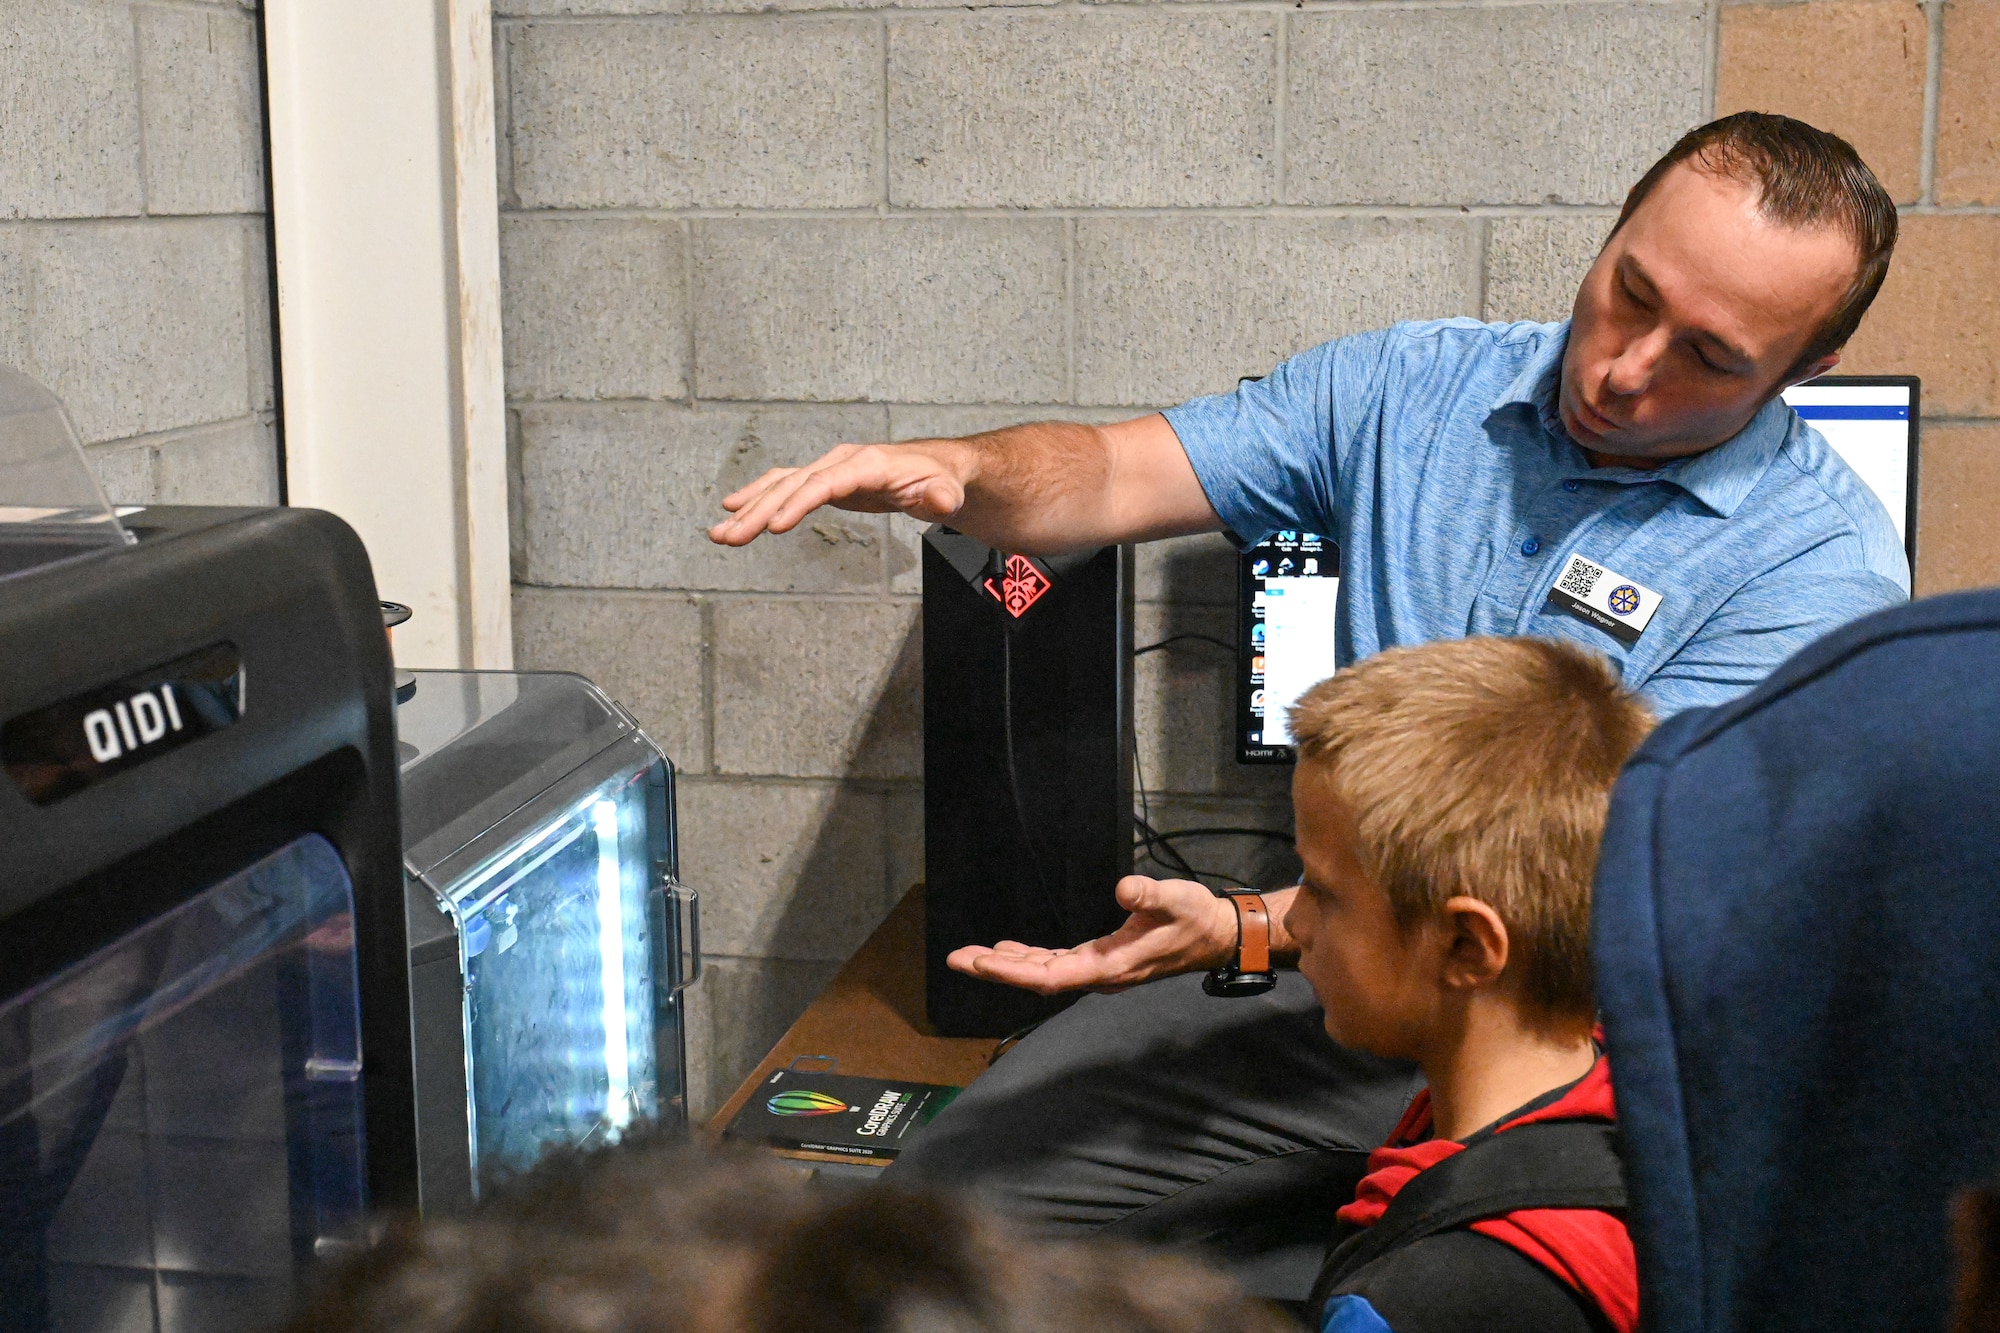 A man shows a 3D printer to a child.